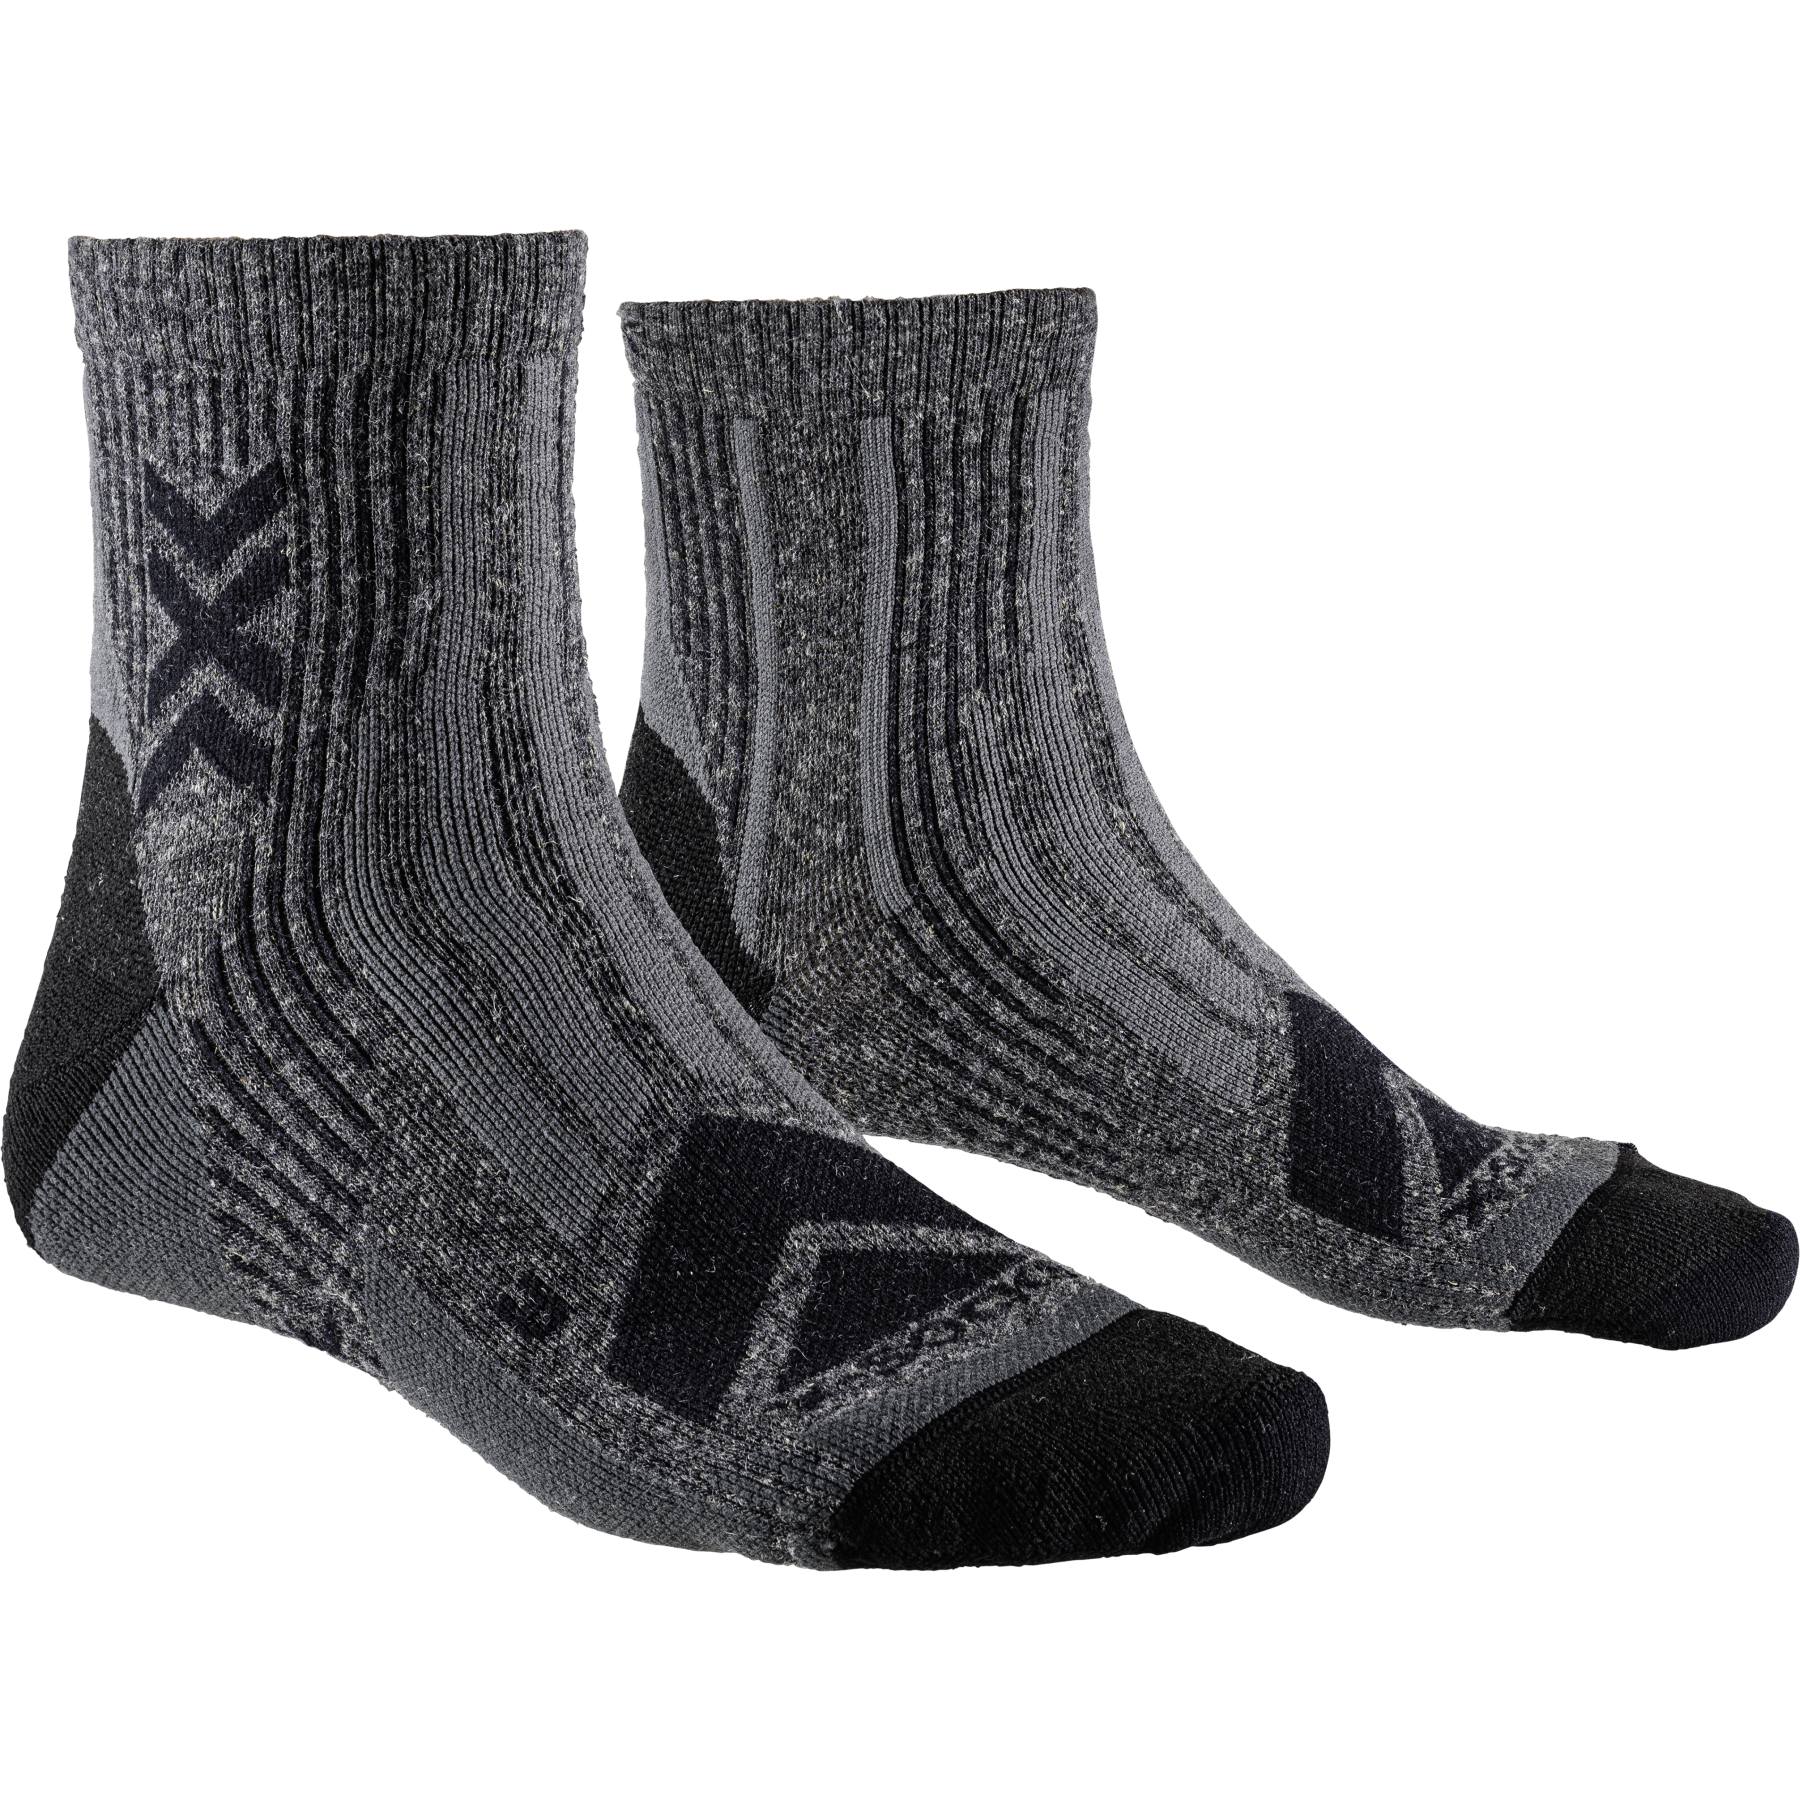 Image of X-Socks Hike Perform Merino Ankle Socks - black/charcoal